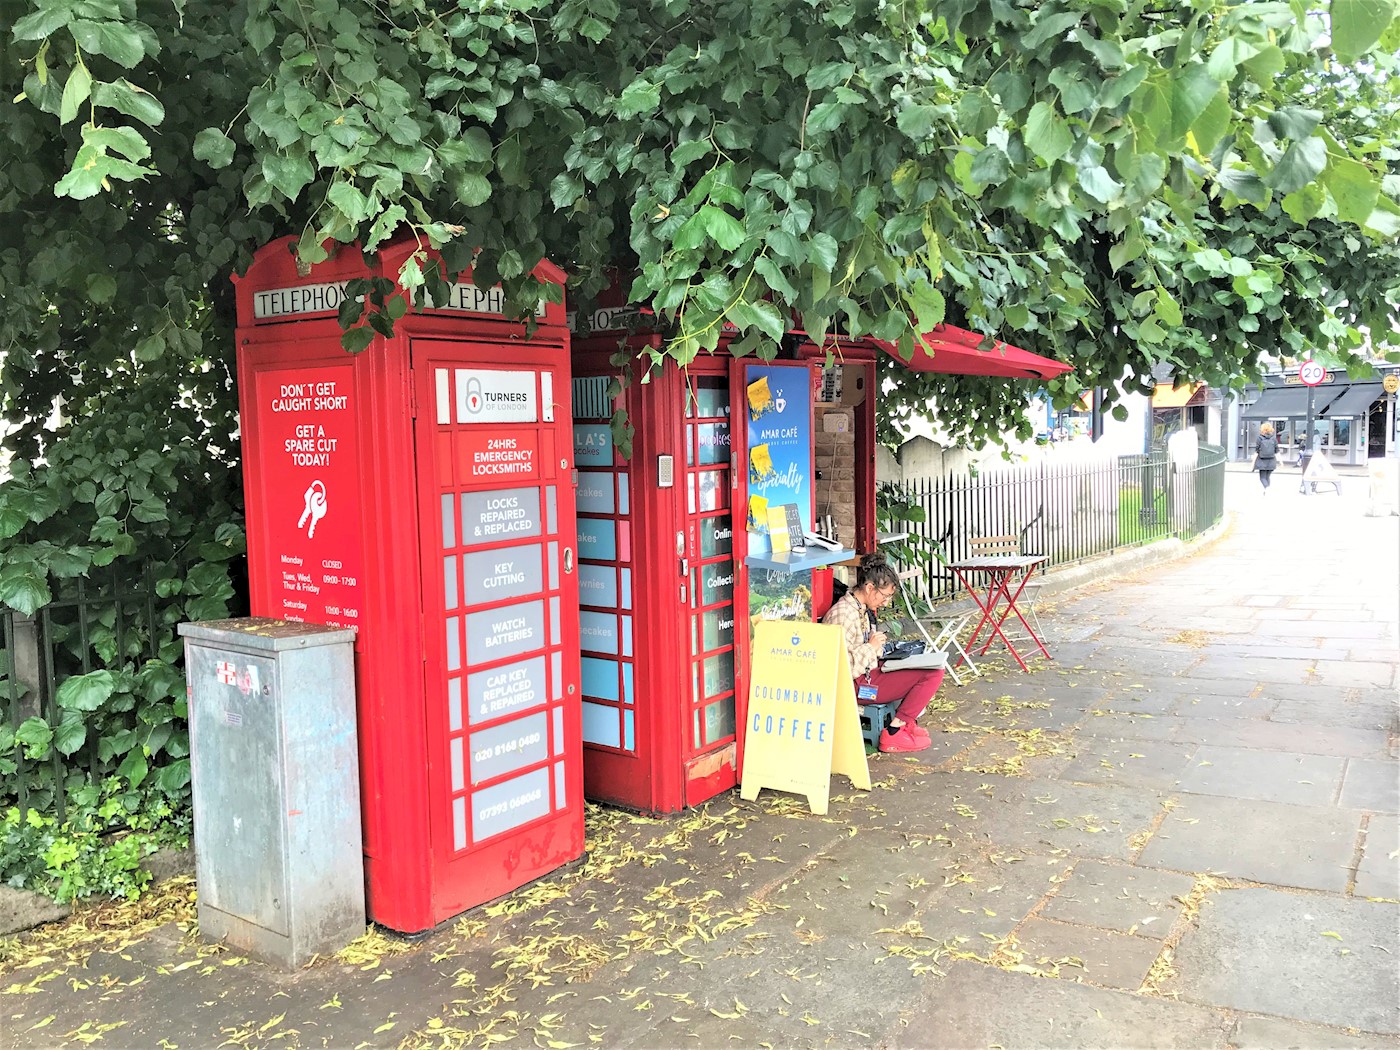 Telephone Kiosk 1 (L), o/s the Mitre Hotel,, Greenwich High Road, Greenwich, SE10 8NA 1/6